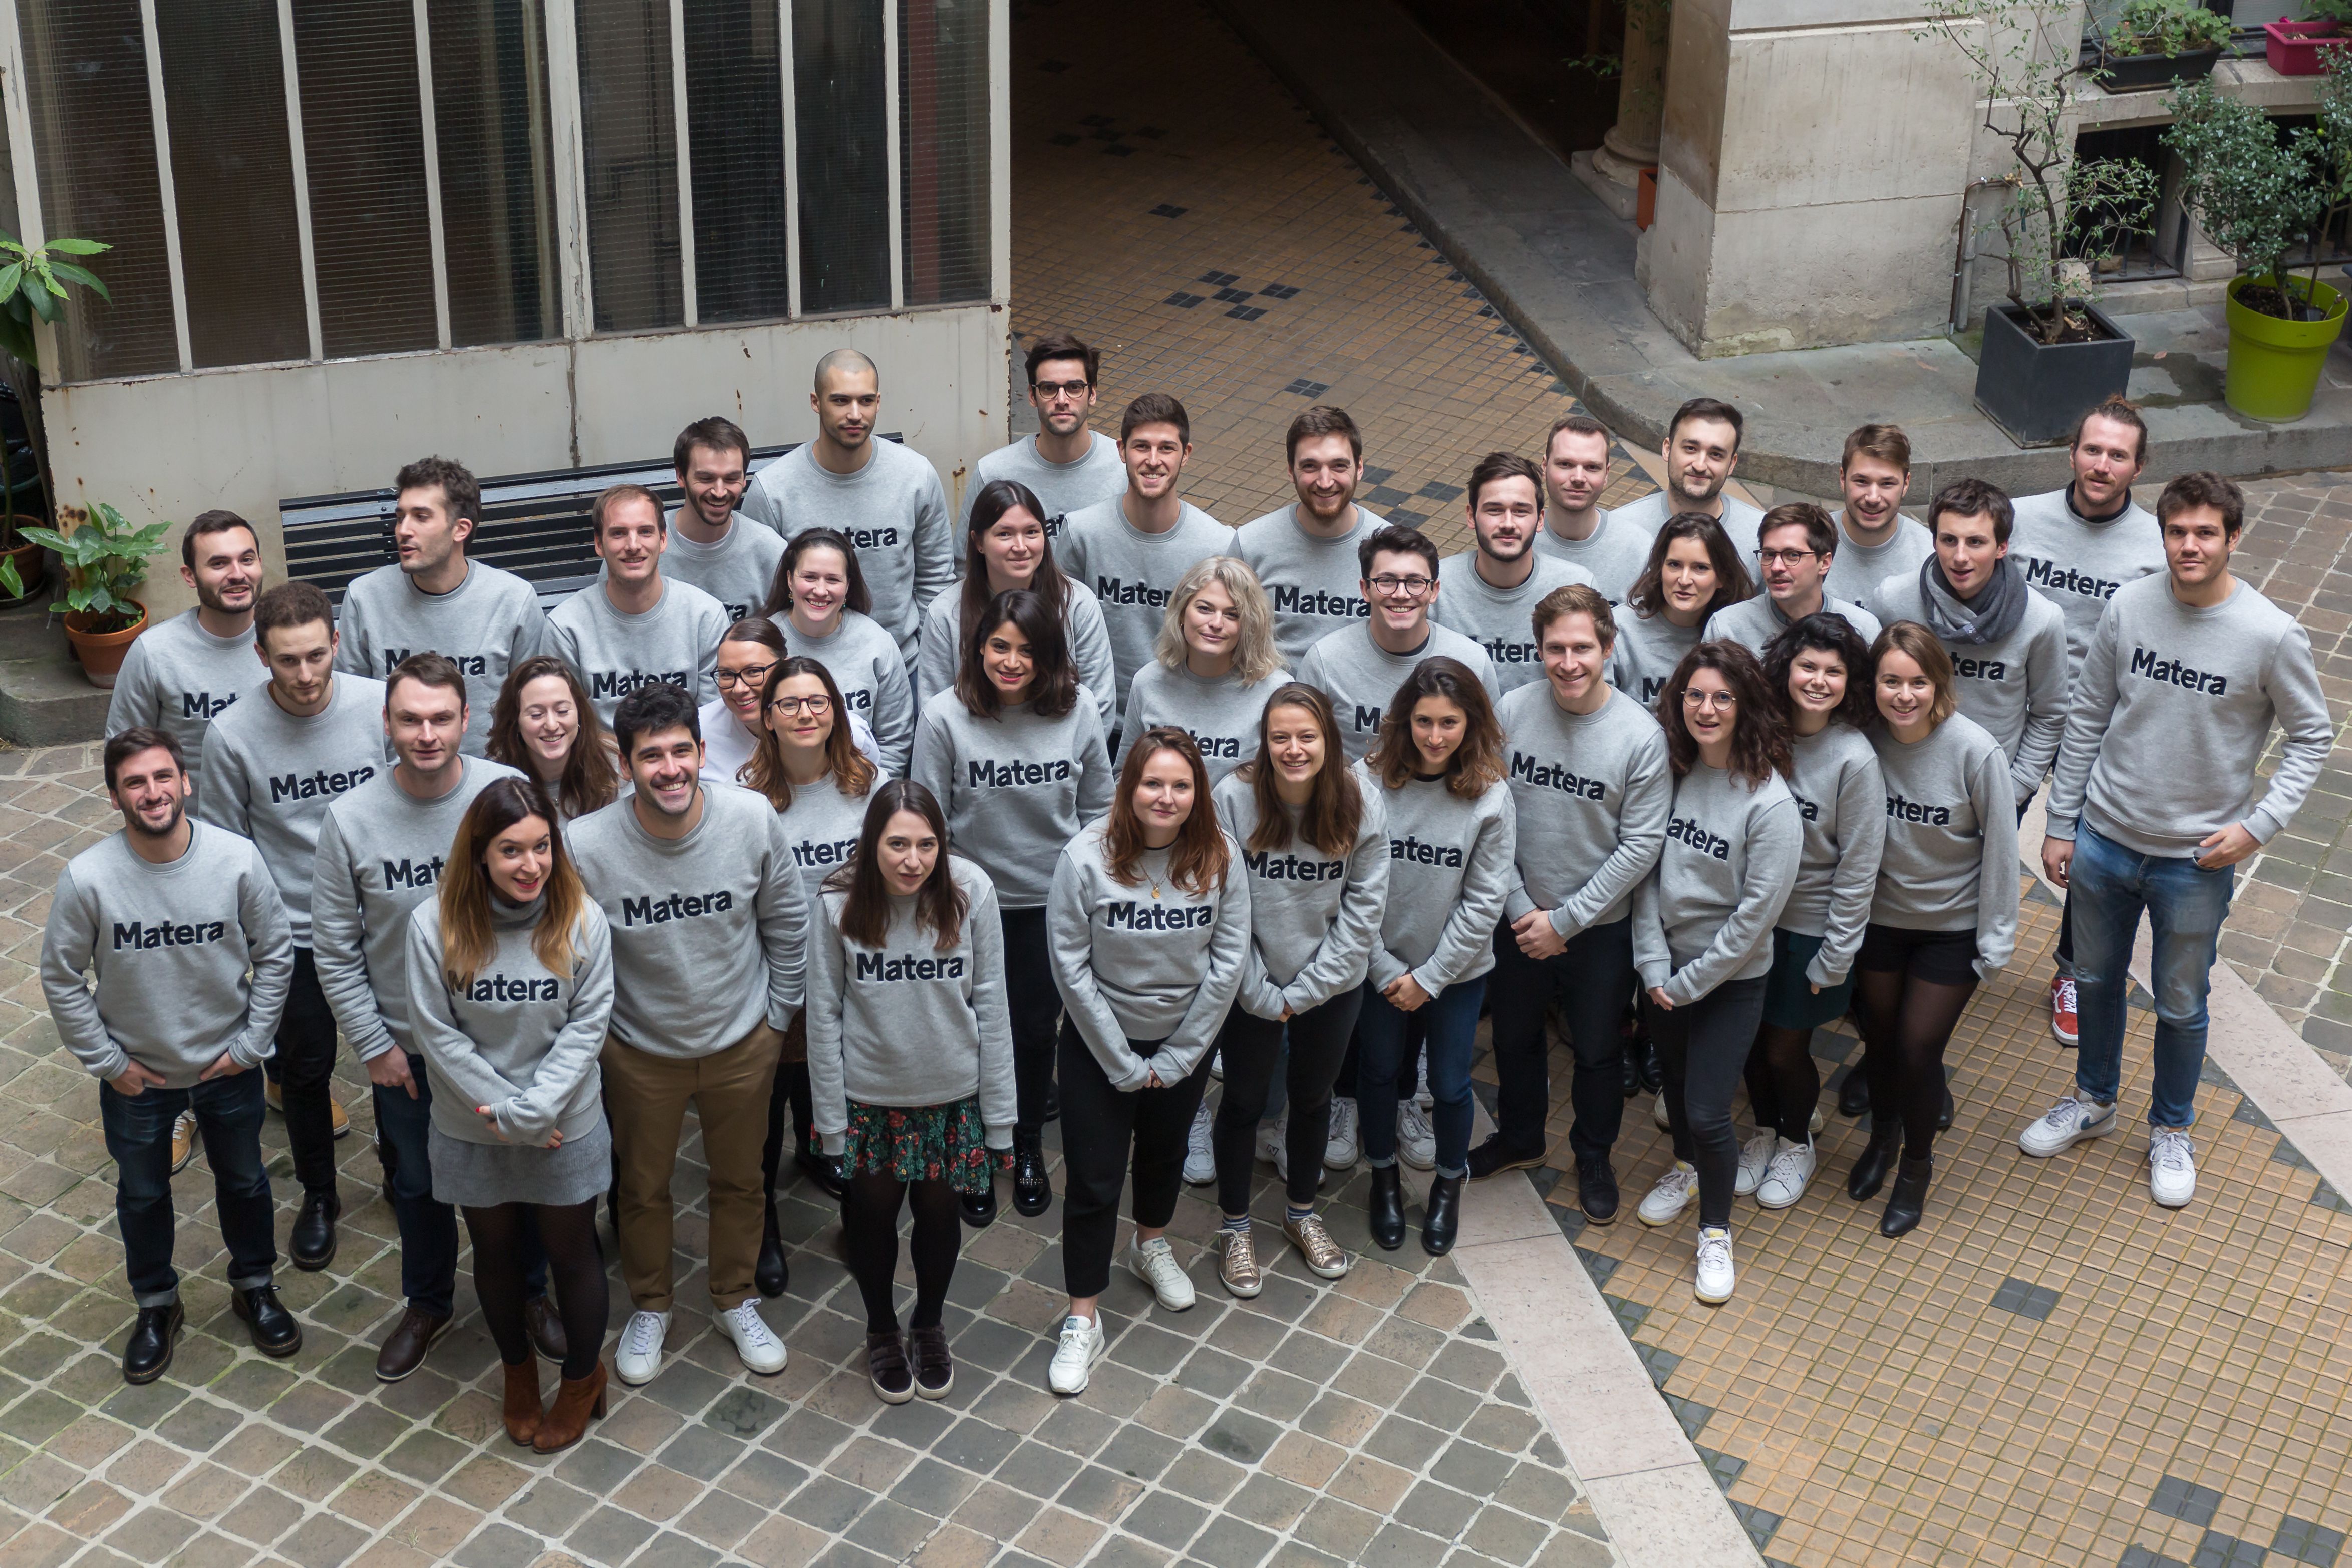 The Matera team at their Paris headquarters